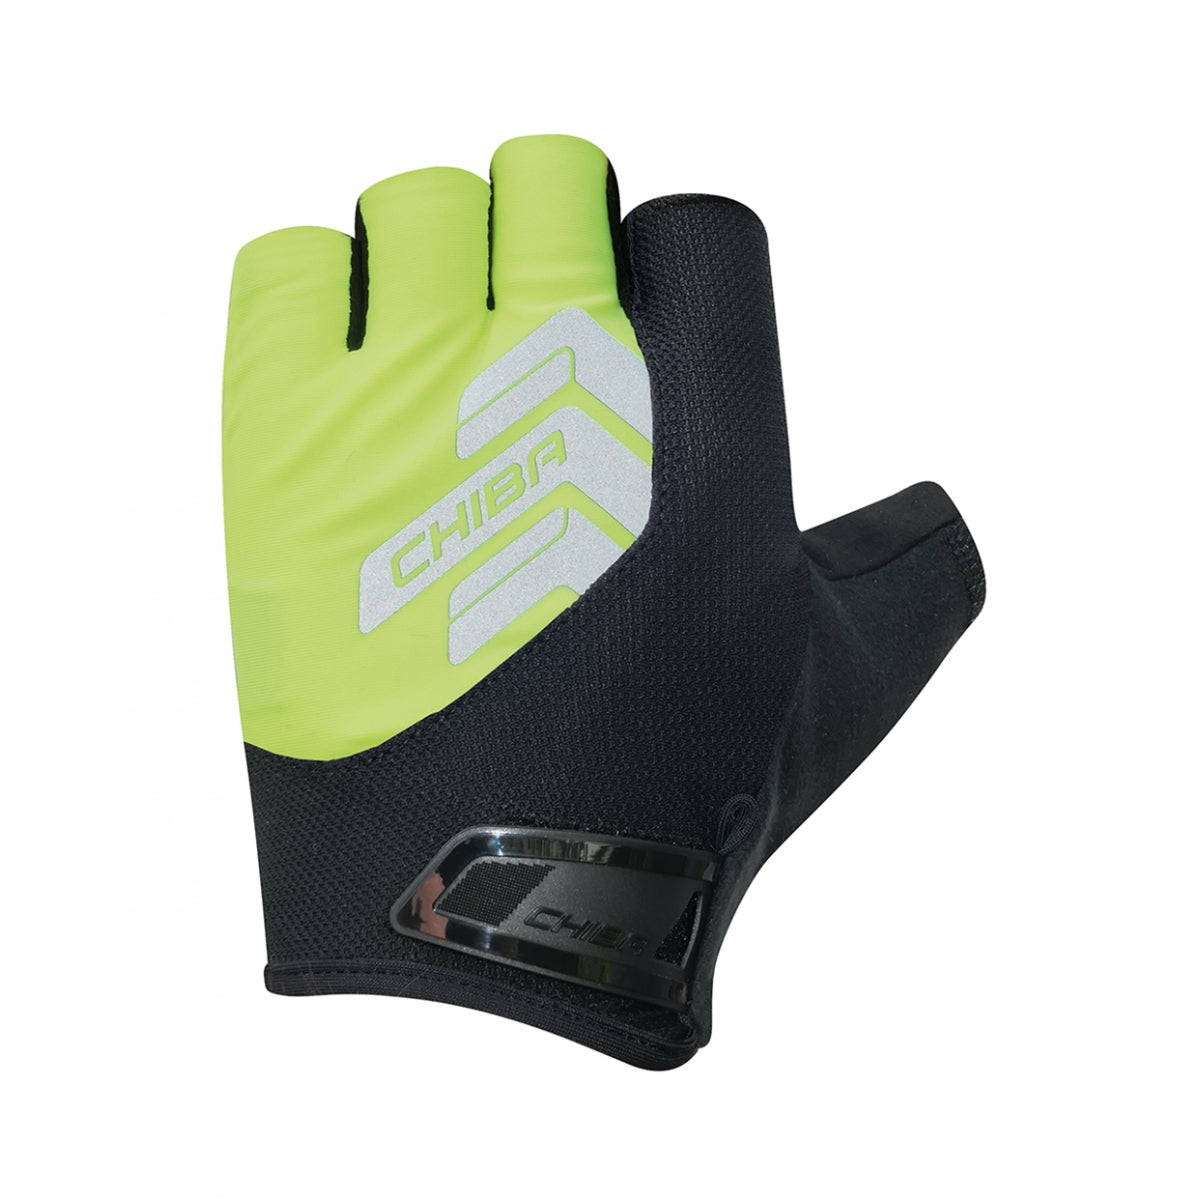 CHIBA Reflex II Glove